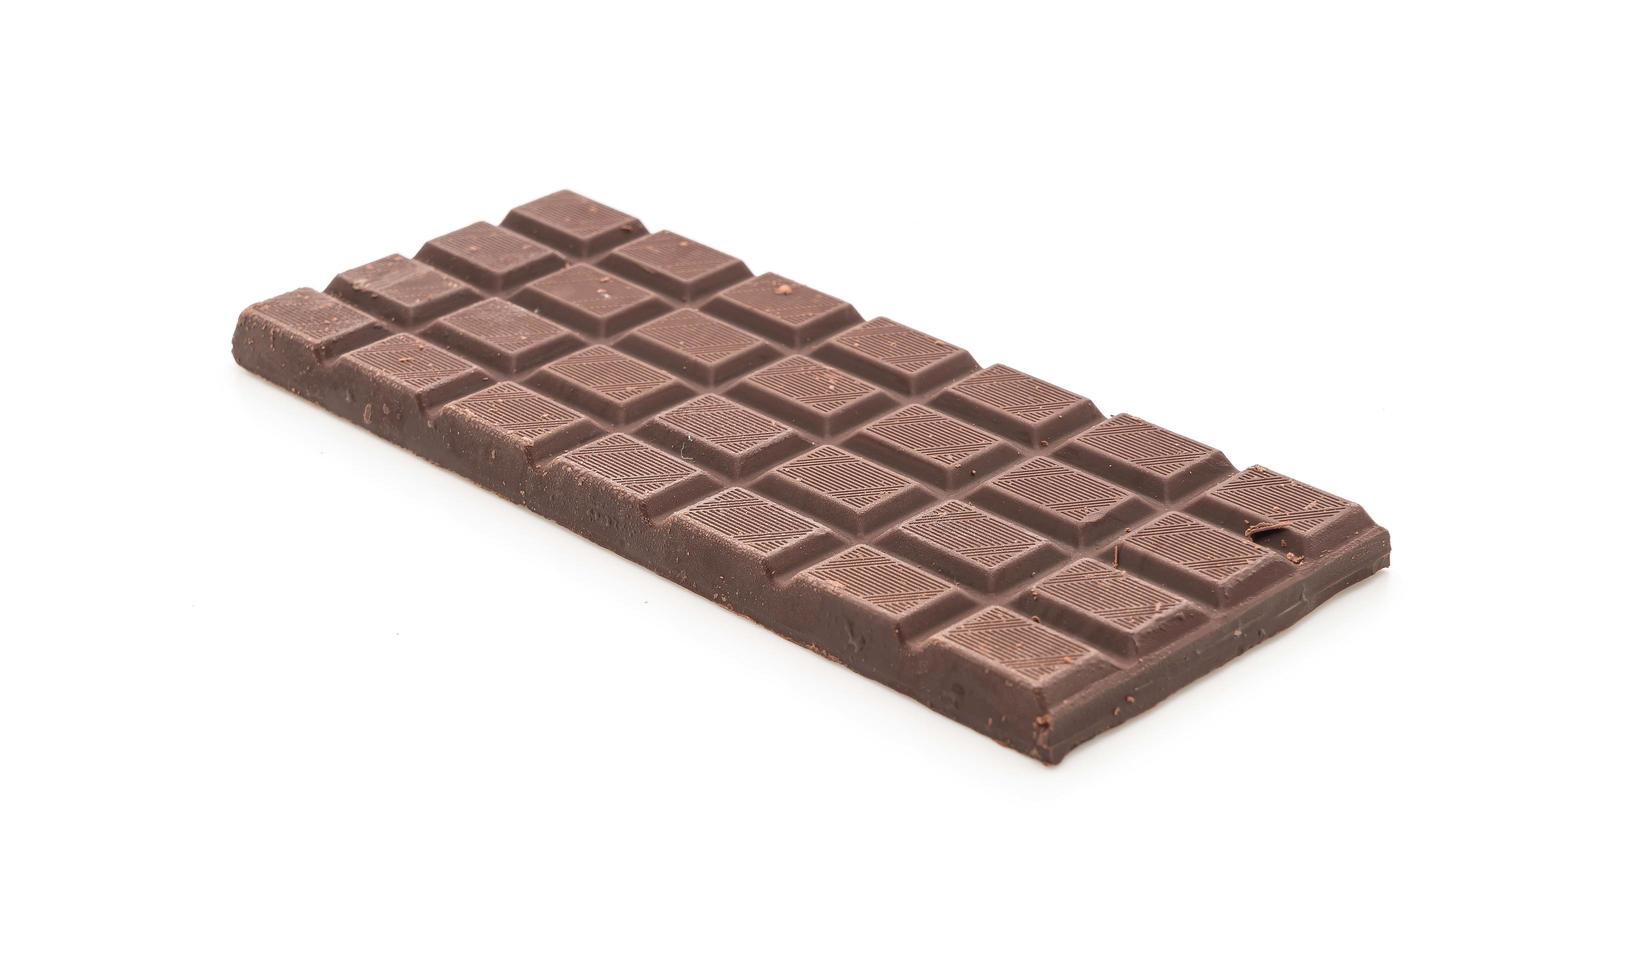 barras de chocolate no fundo branco foto